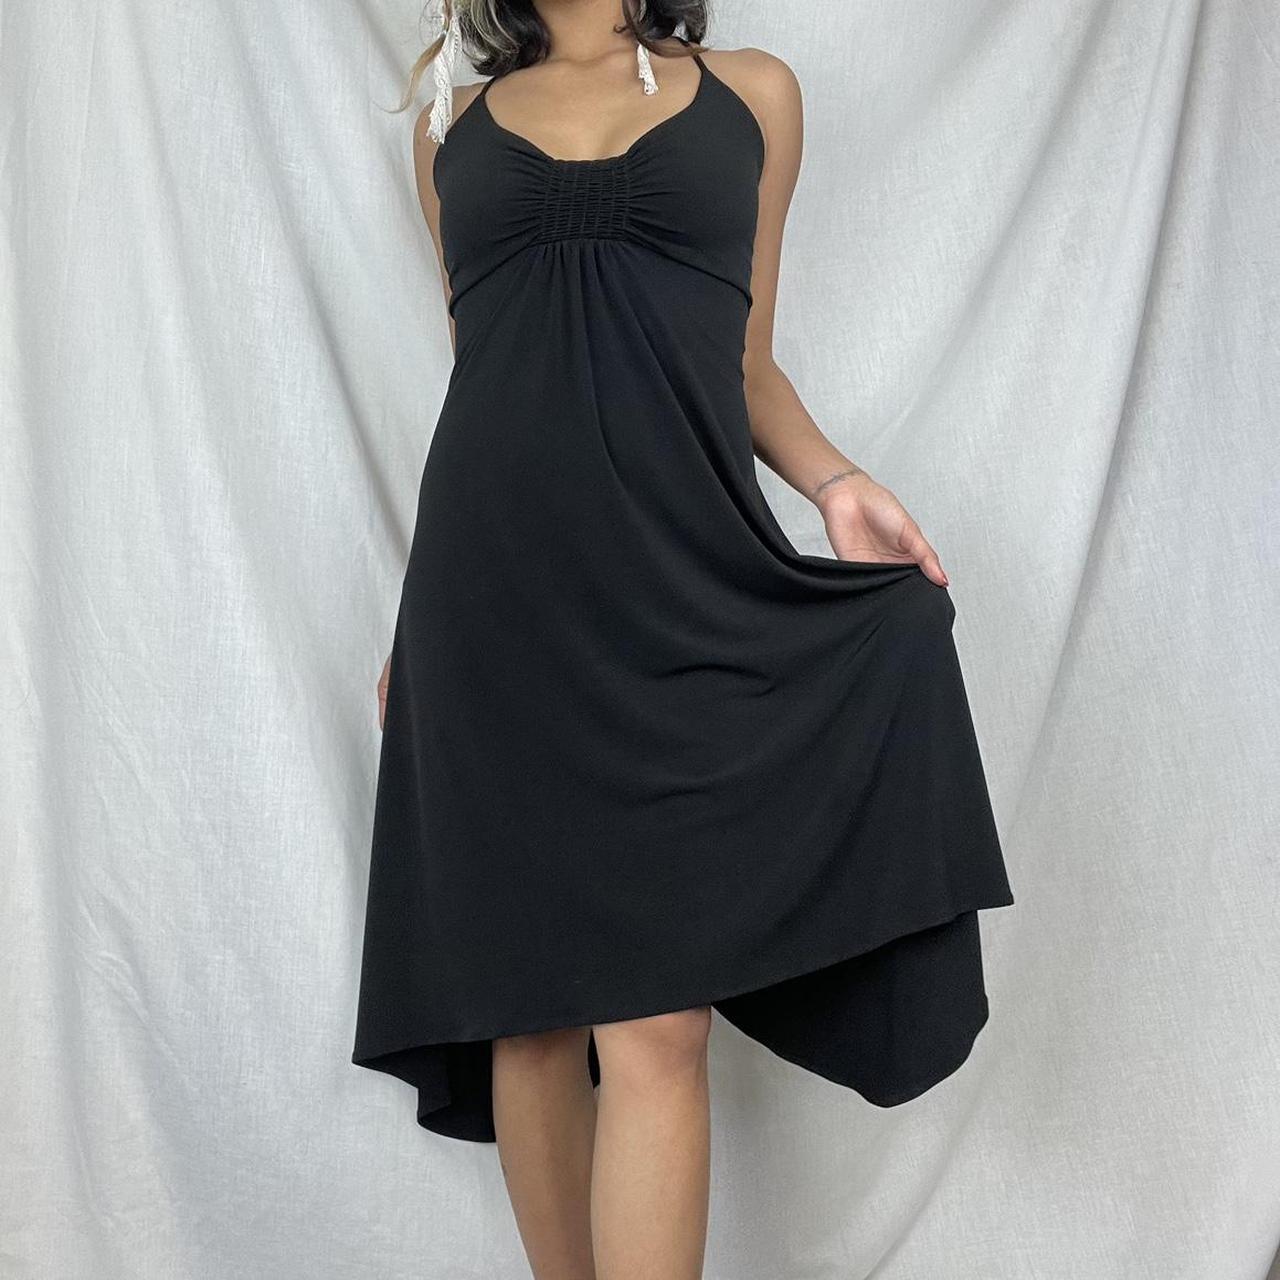 Iconic semi formal dress 2000’s sexy black midi... - Depop